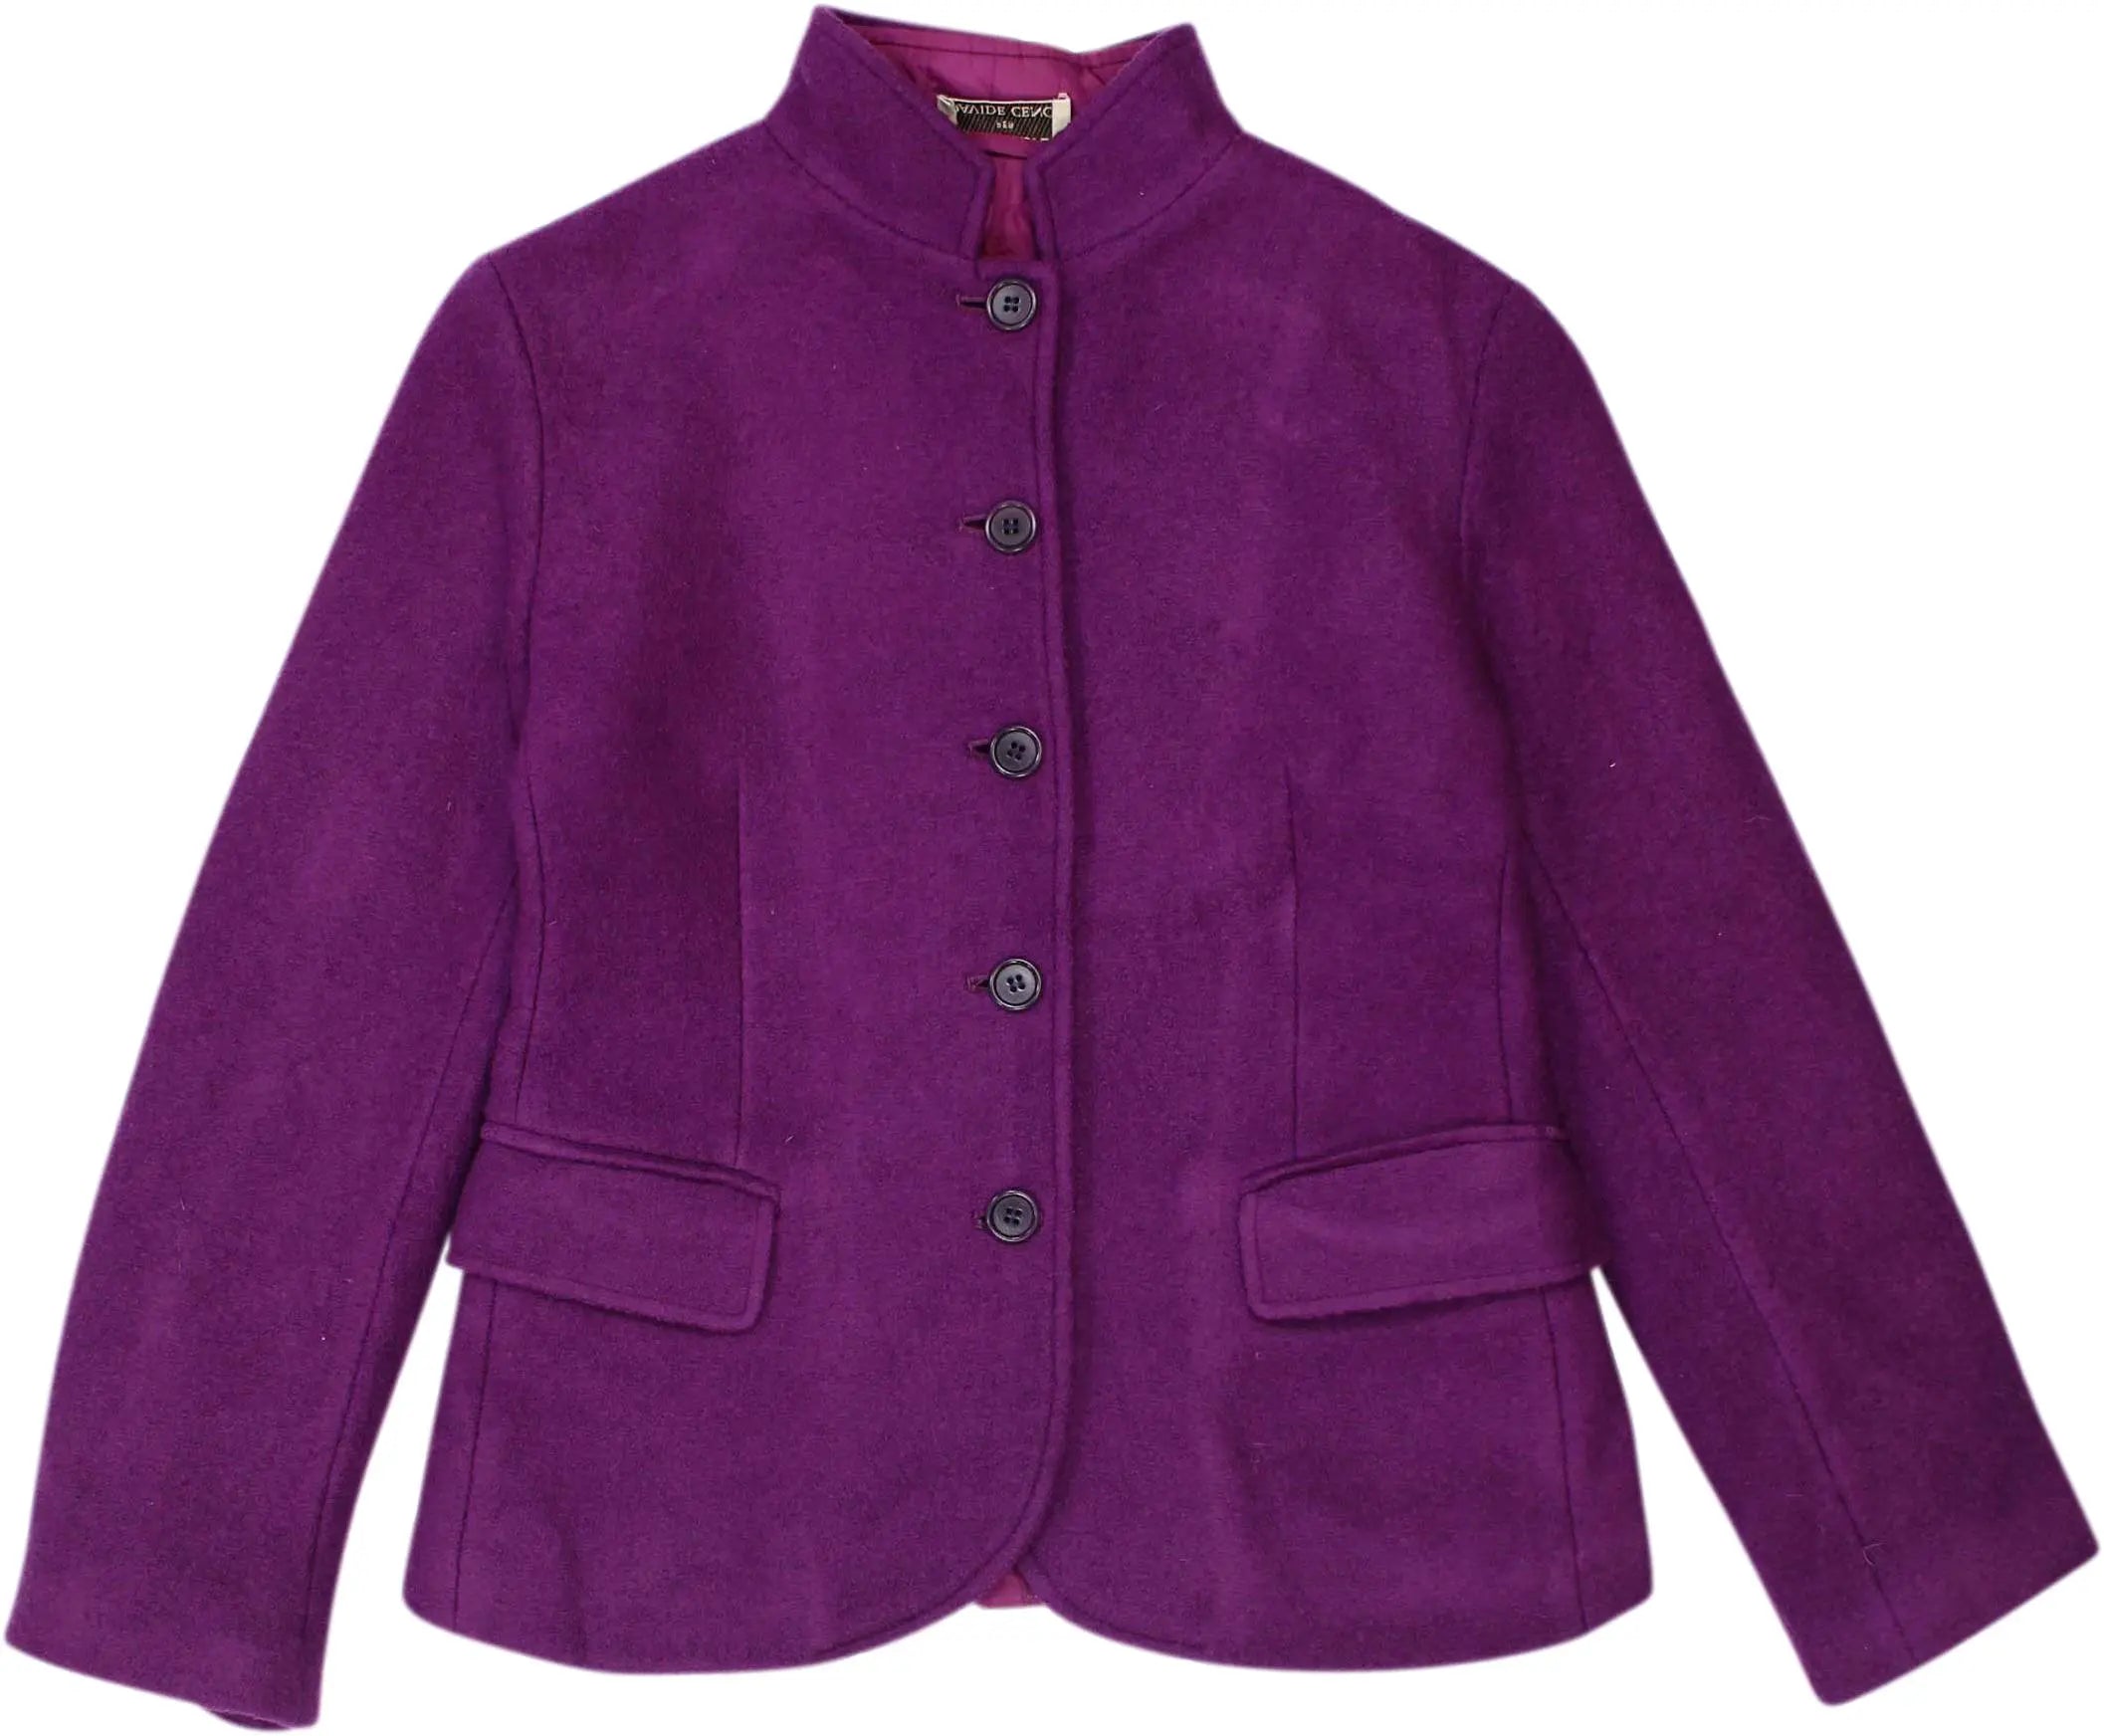 Alberto Aspesi - Purple Wool Coat- ThriftTale.com - Vintage and second handclothing